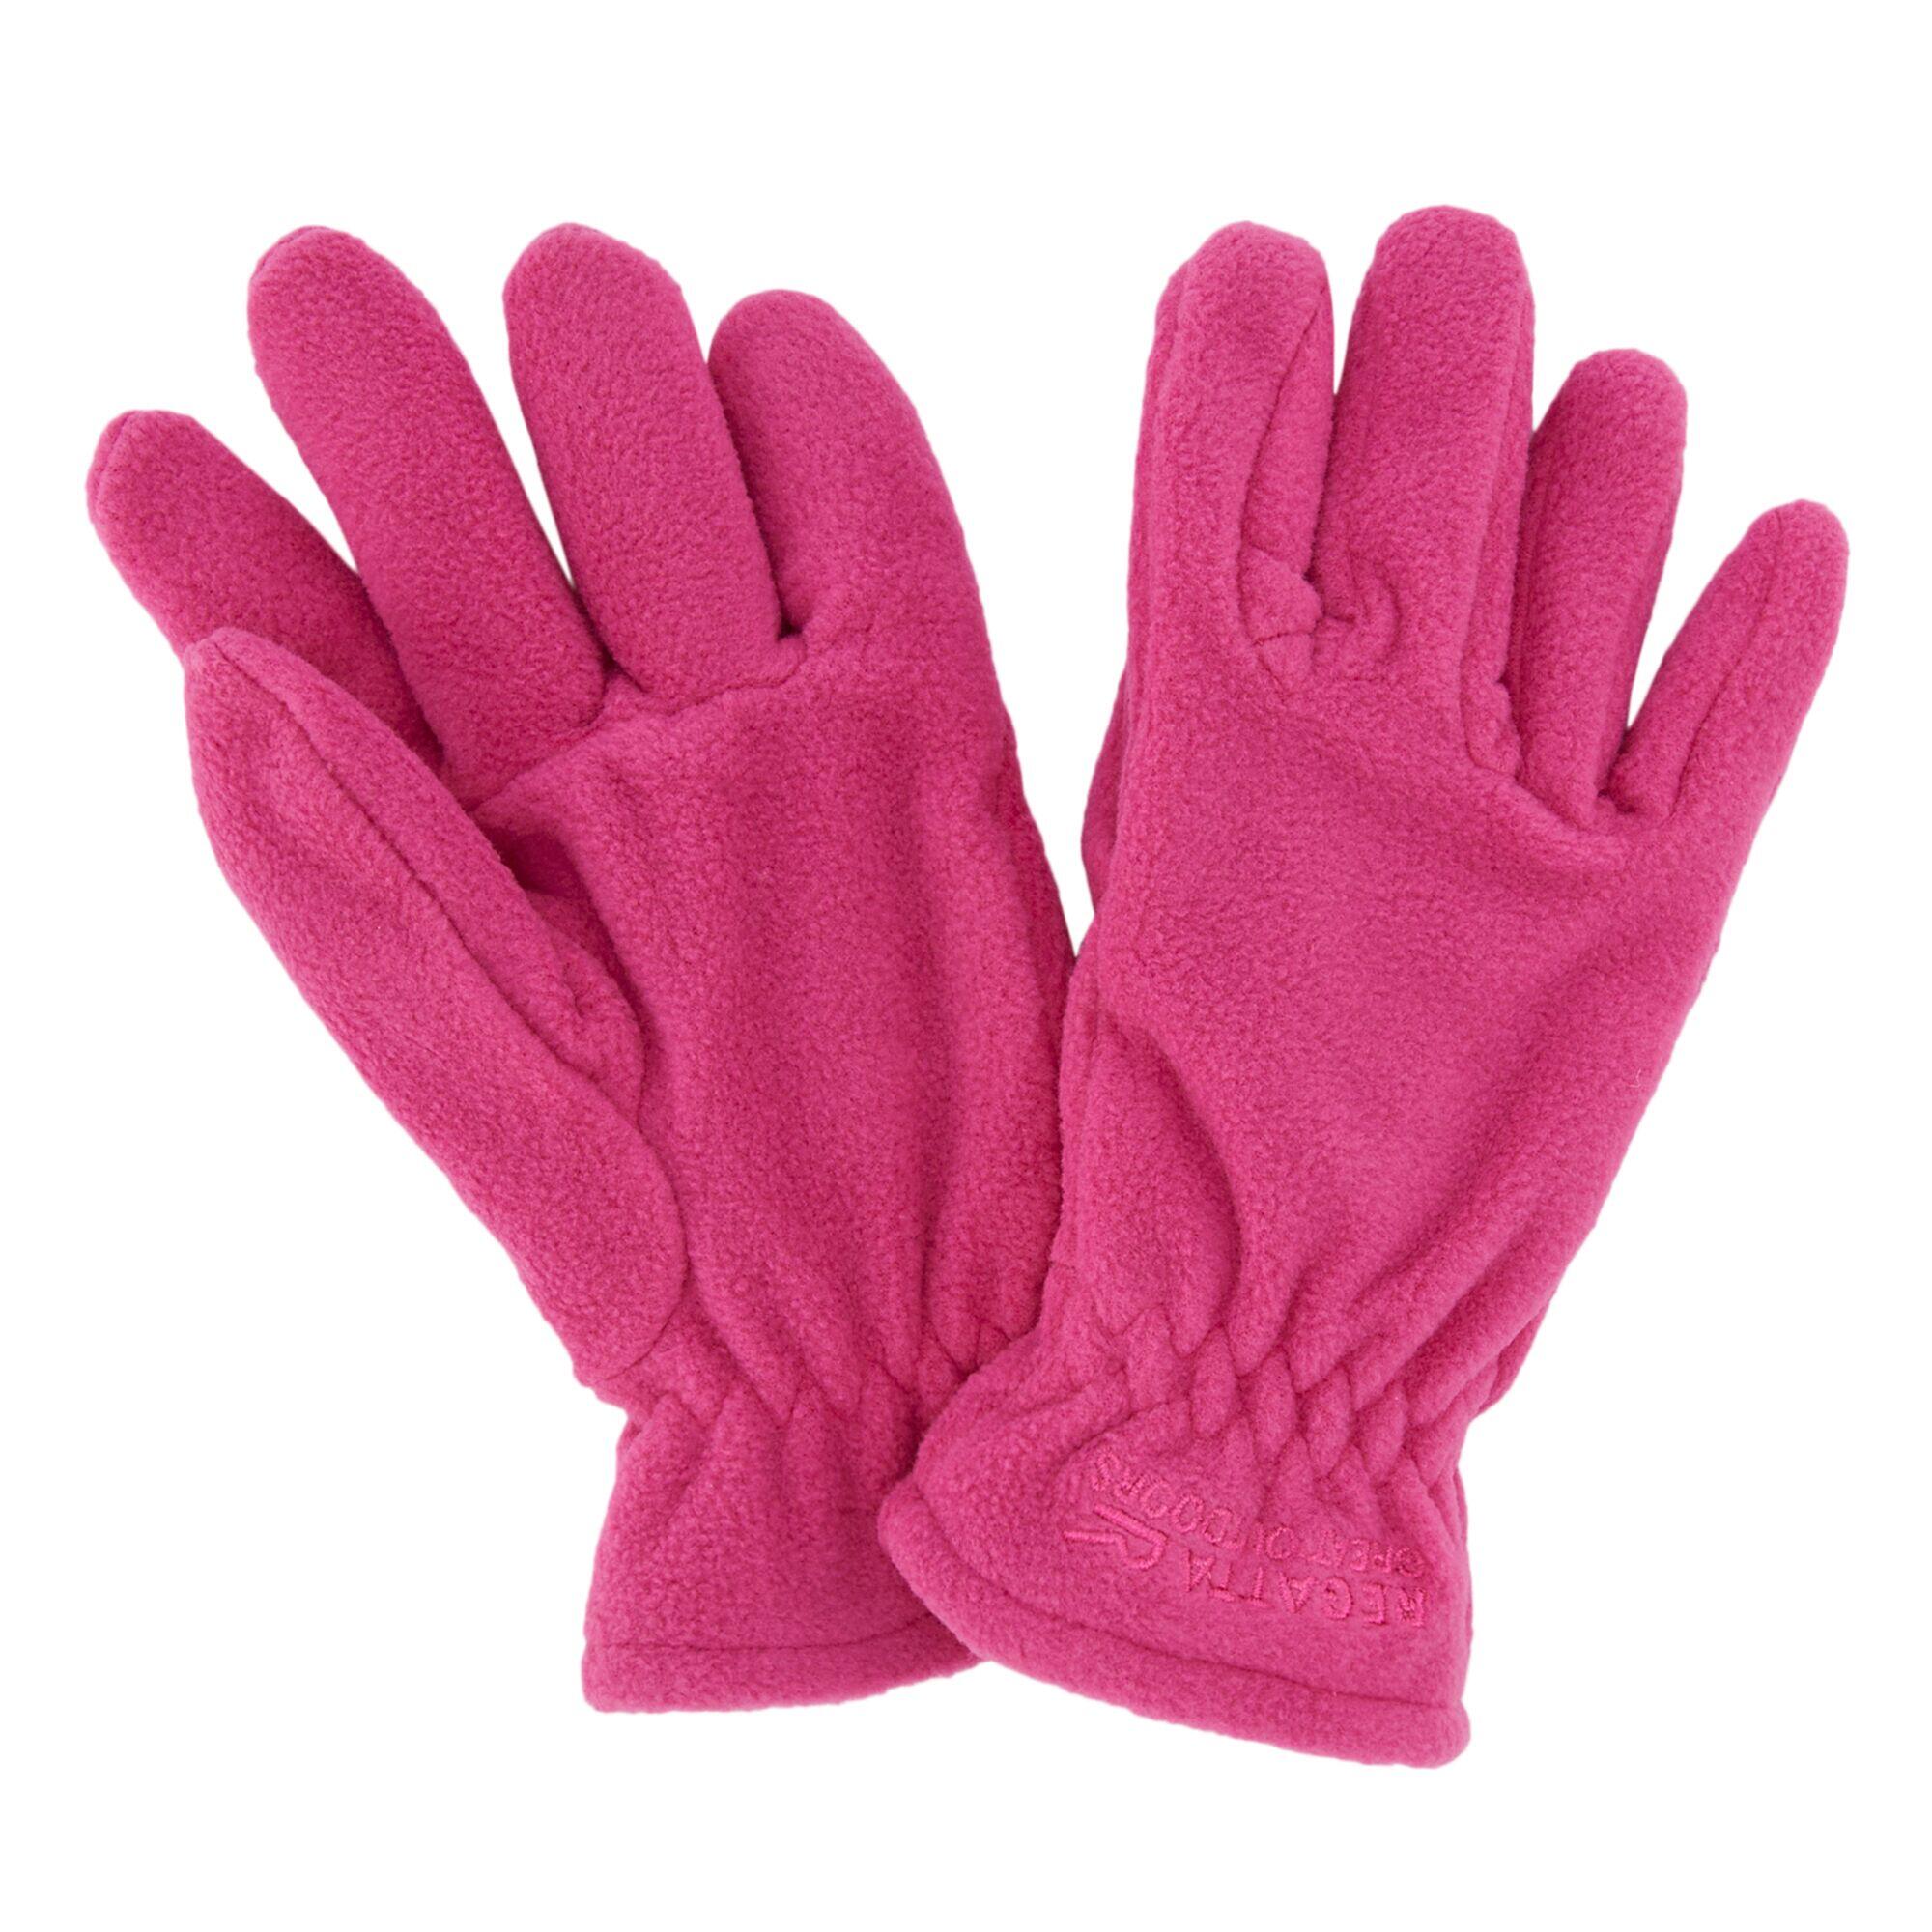 REGATTA Taz II Kids Walking Winter Gloves